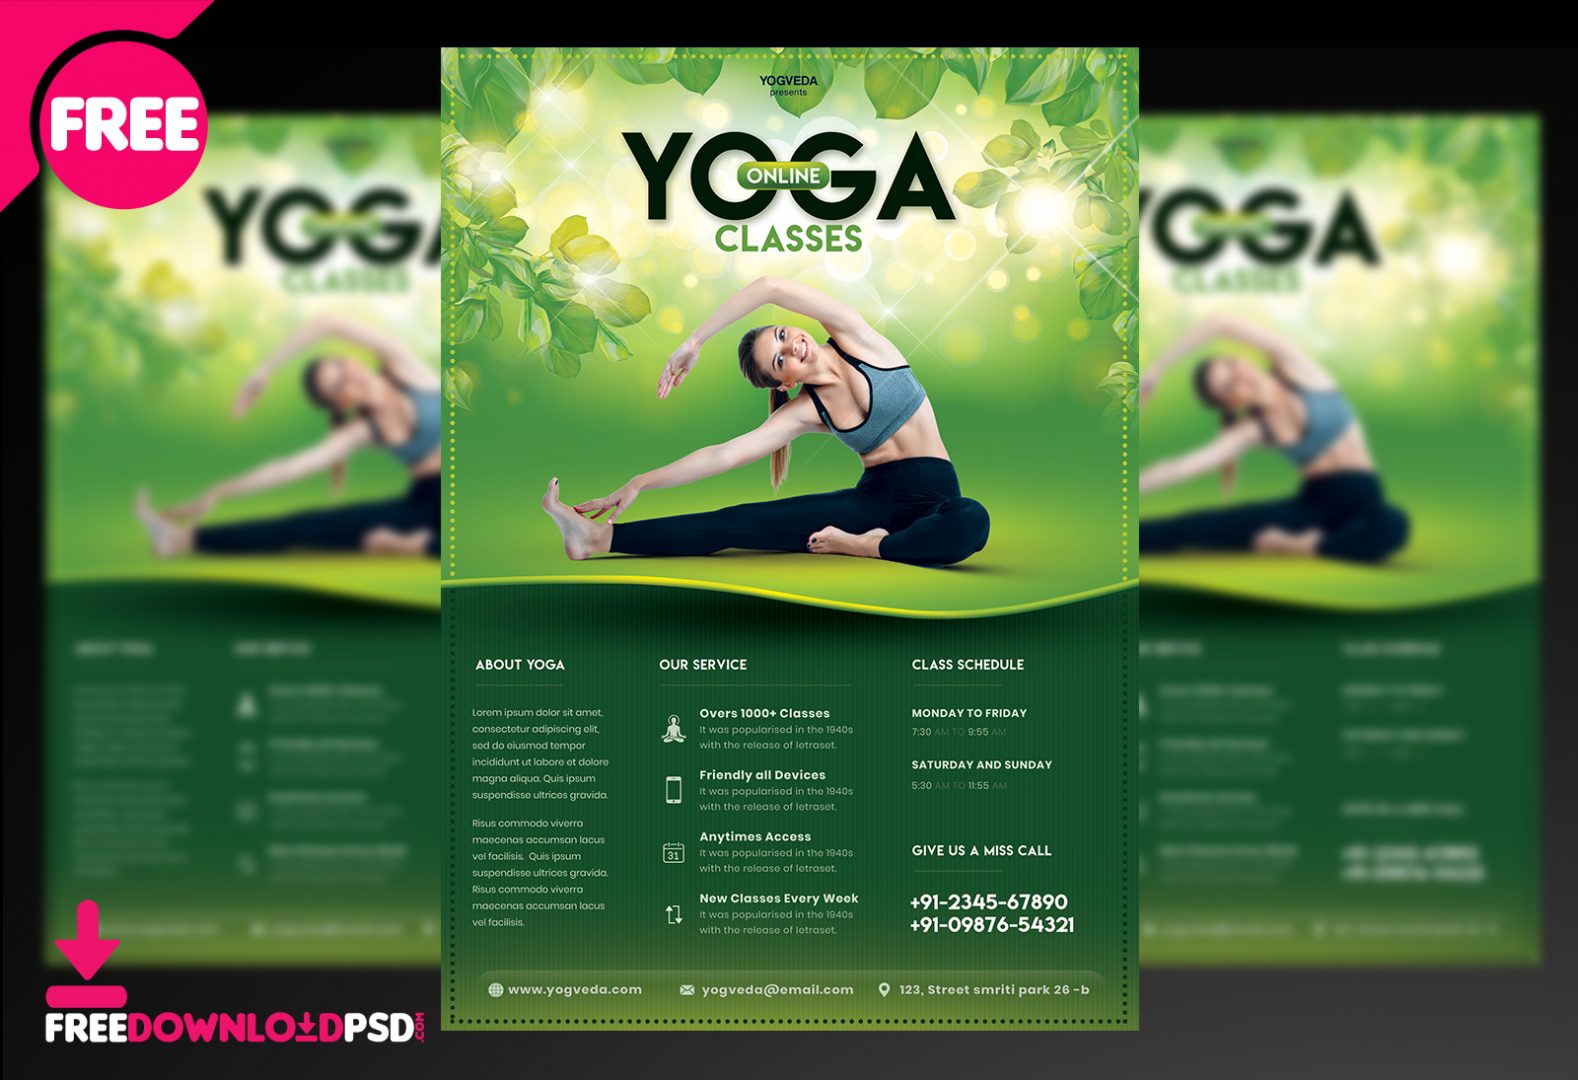 online-yoga-classes-flyer-psd-template-freedownloadpsd